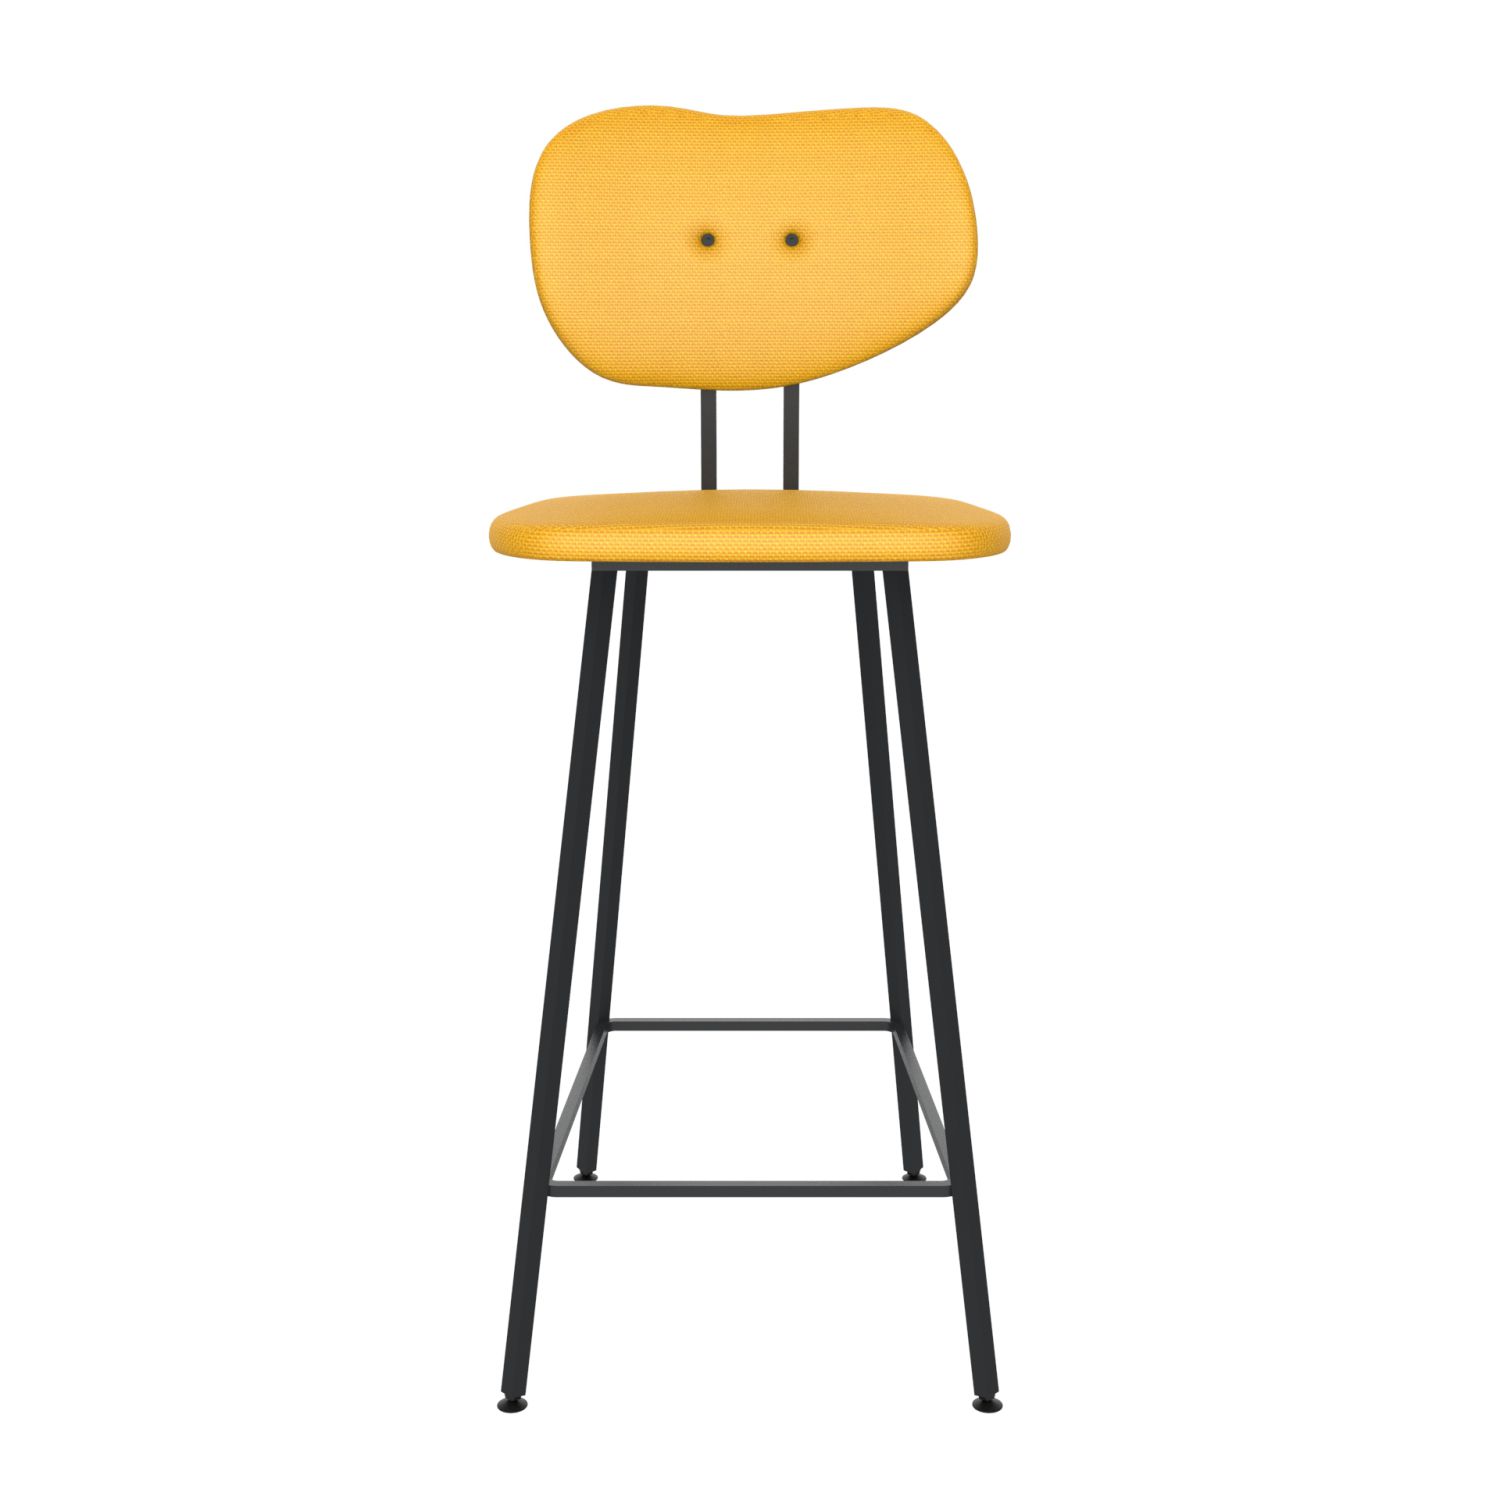 maarten baas barstool 75 cm without armrests backrest b lemon yellow 051 frame black